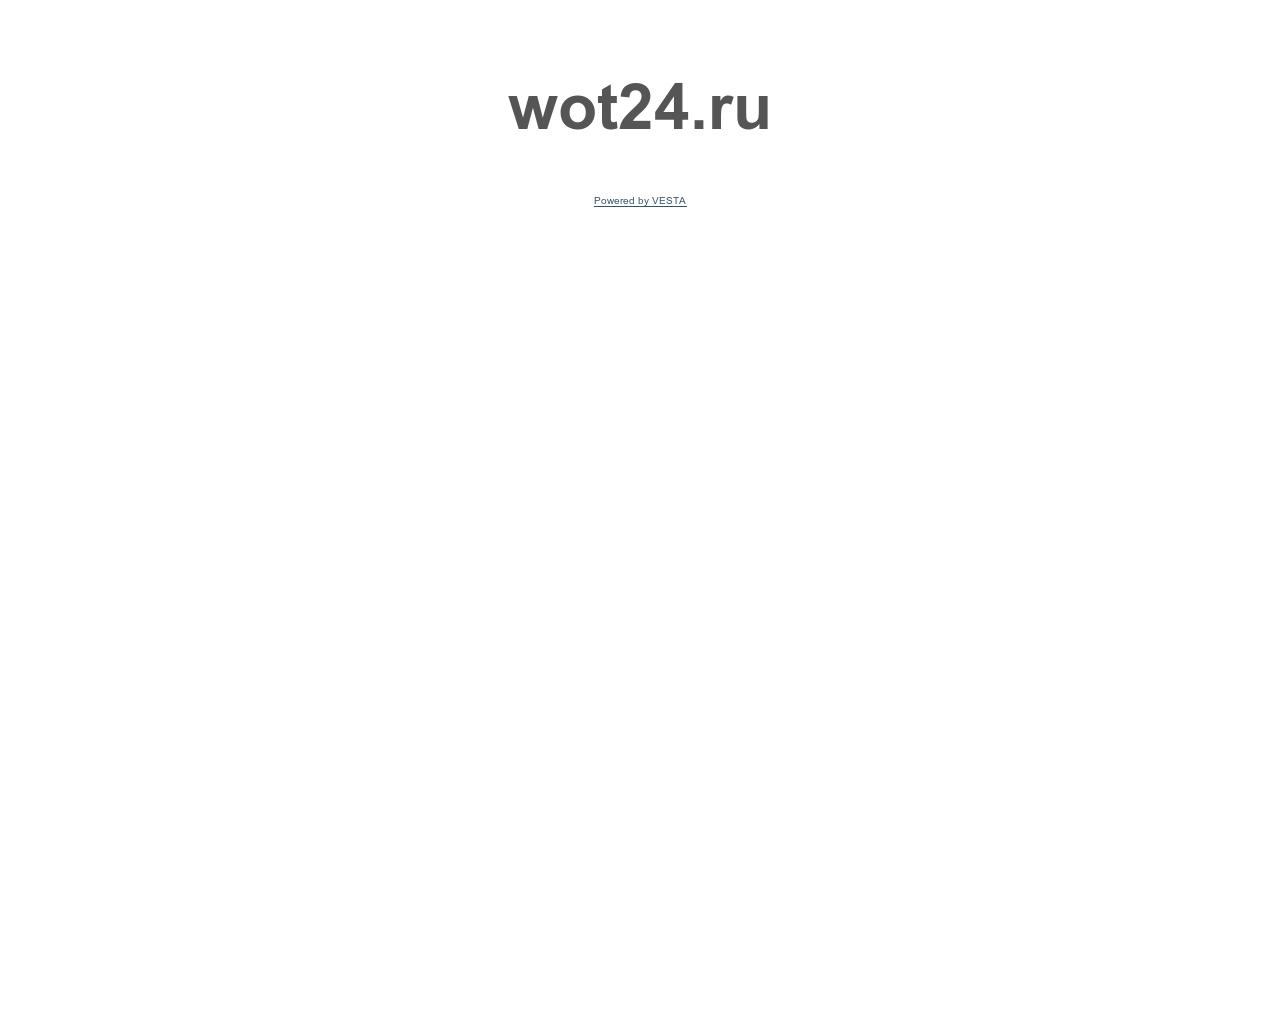 Изображение сайта wot24.ru в разрешении 1280x1024